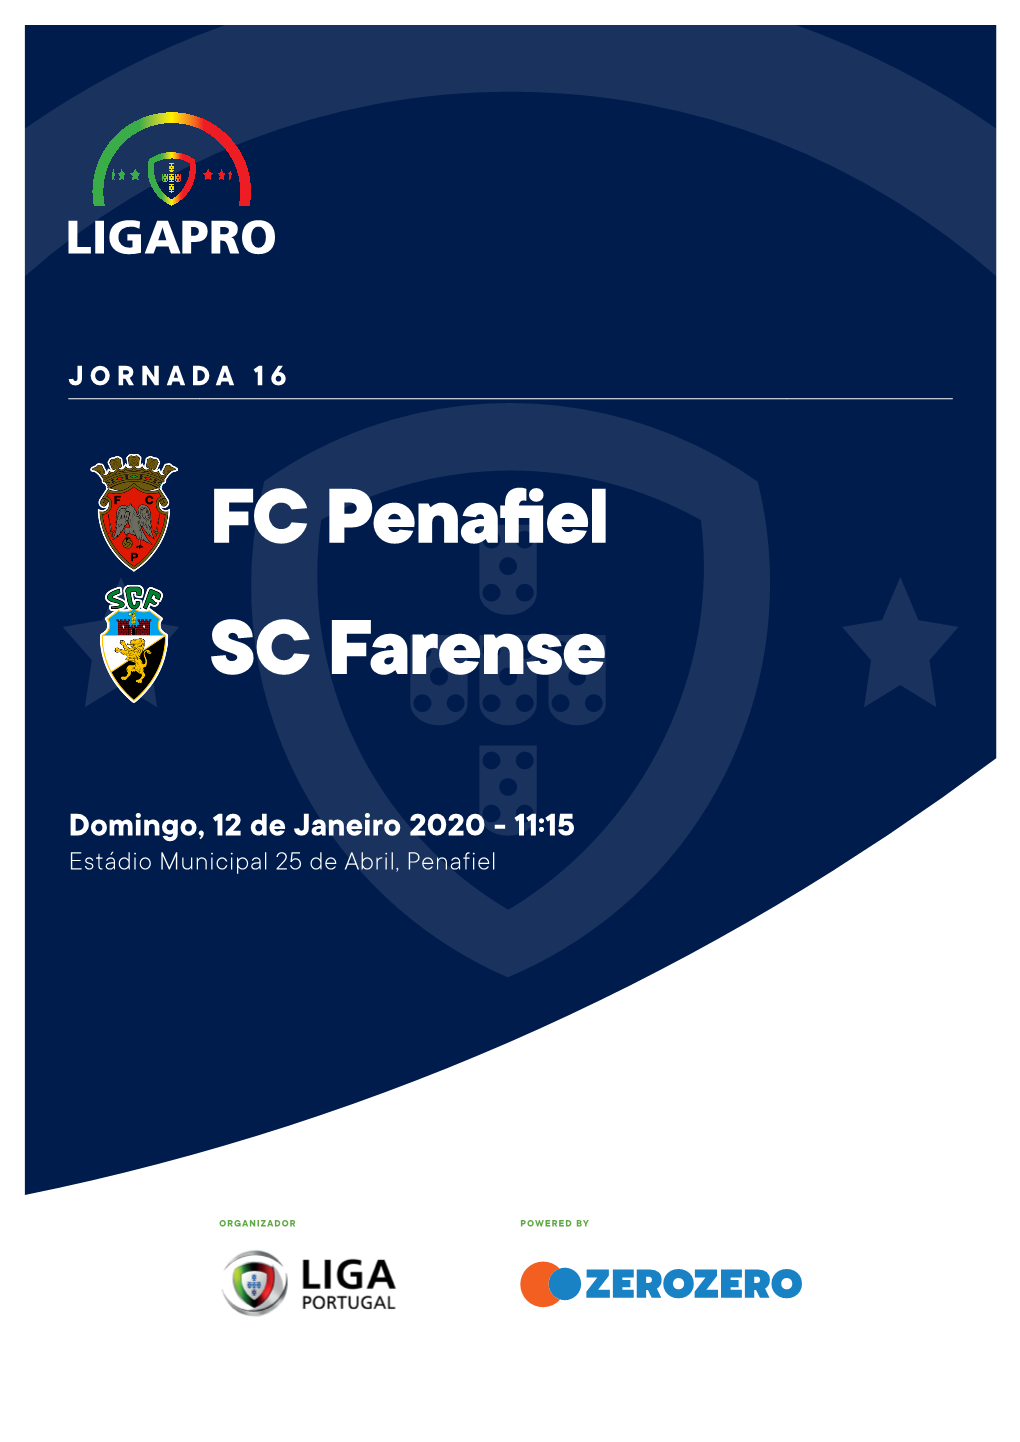 FC Penafiel SC Farense